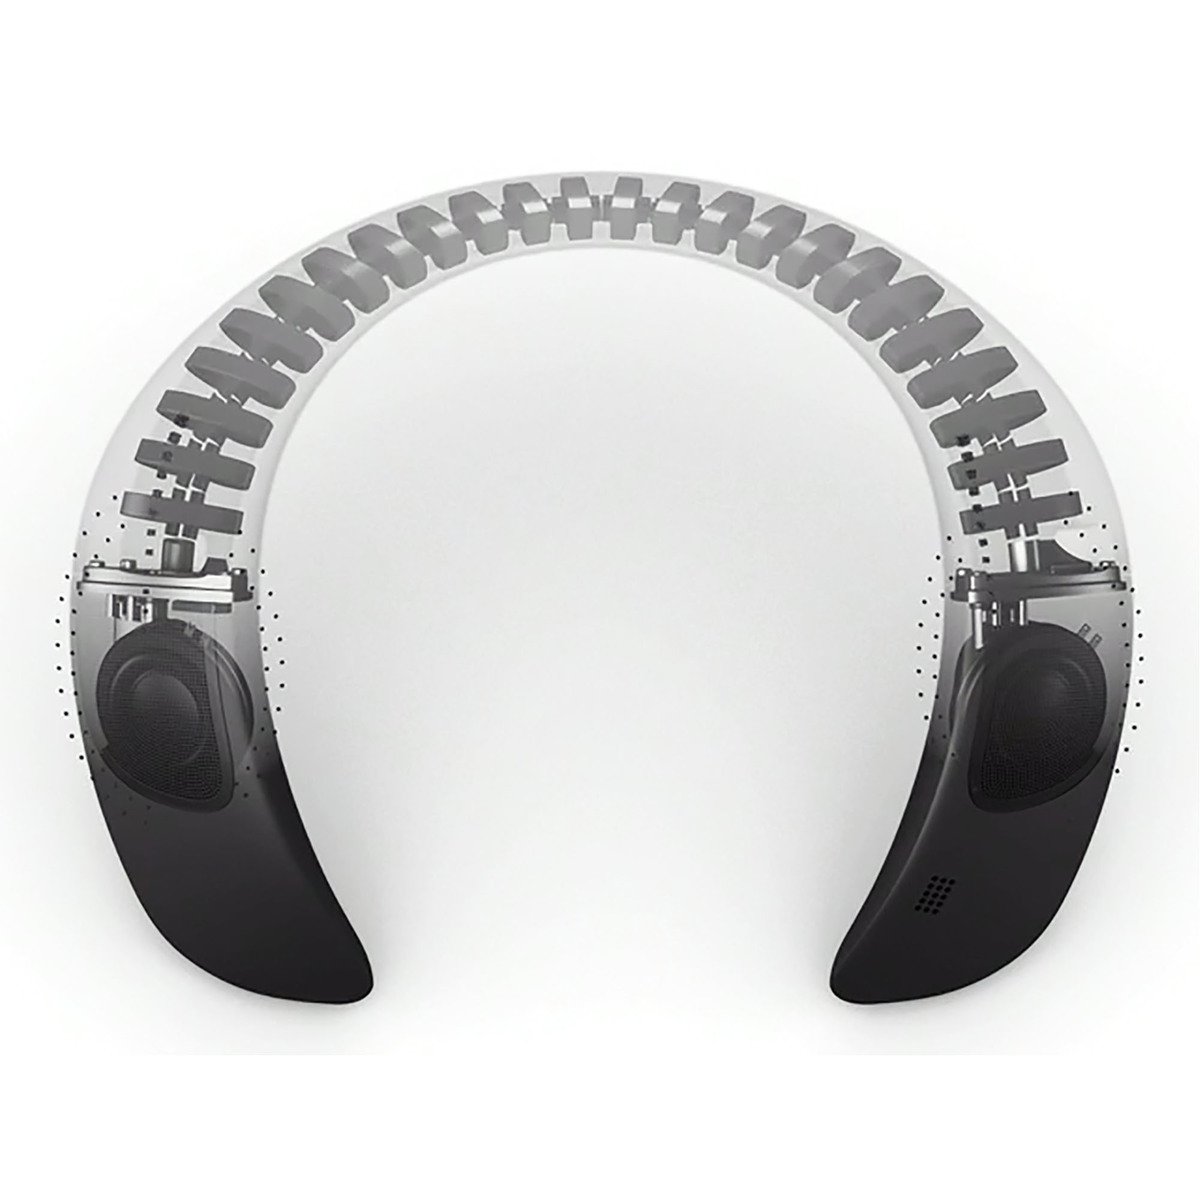 Bose SoundWear Companion Wireless Speaker Black